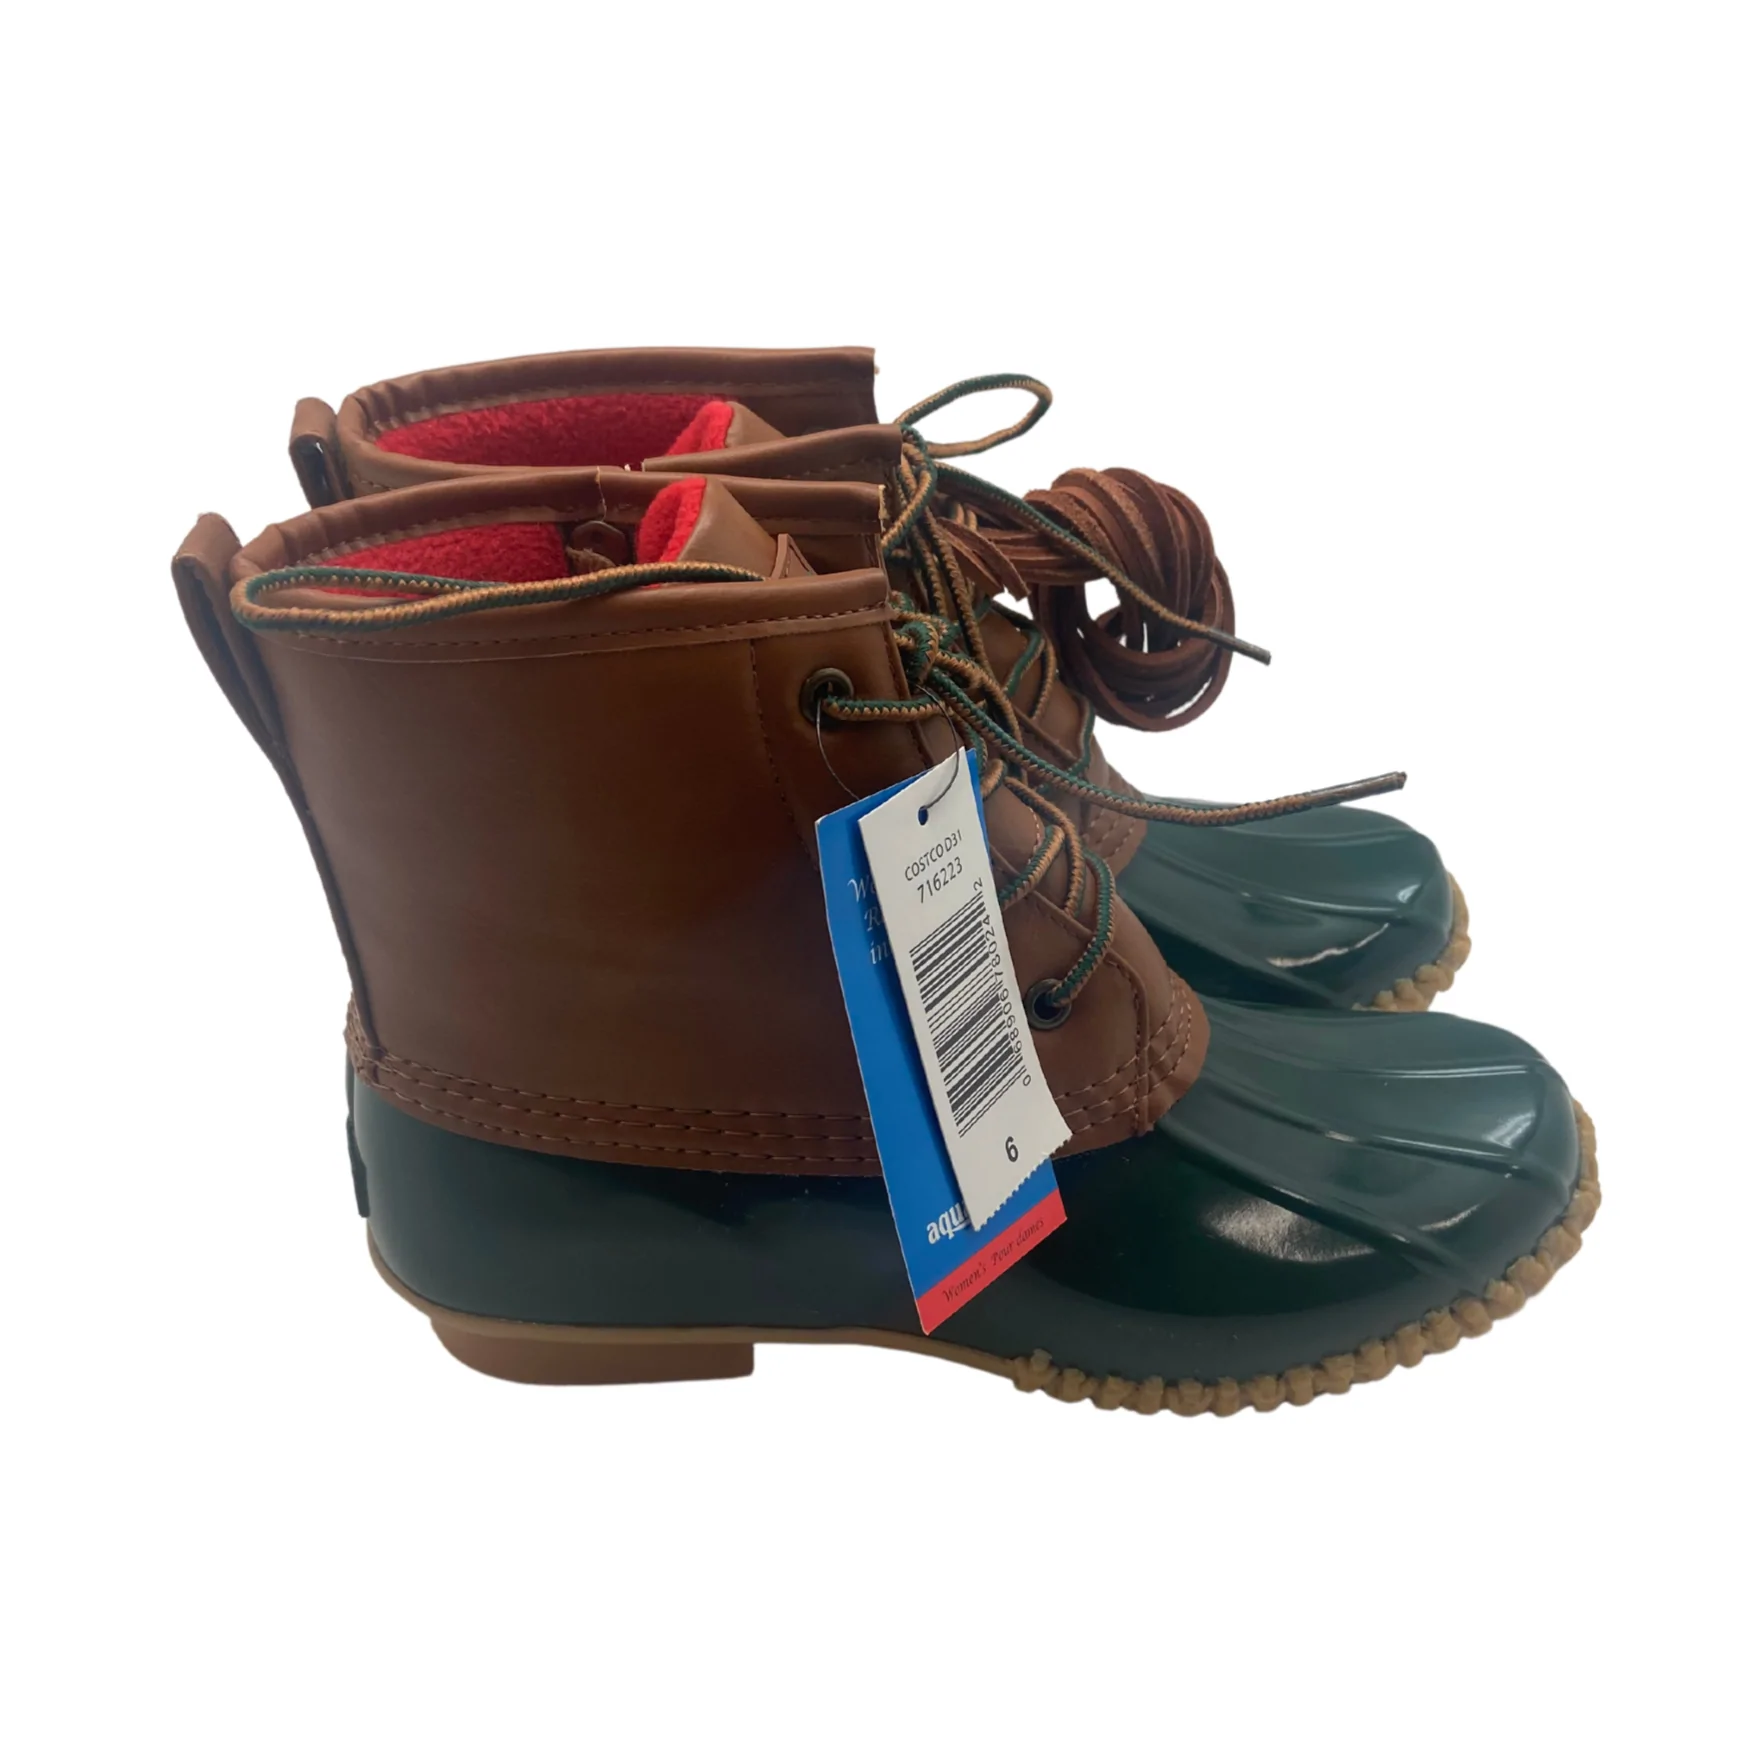 Aquatherm: Women's Boot / Waterproof / Fleece Lining / Lace up / Brown / Green / Size 6